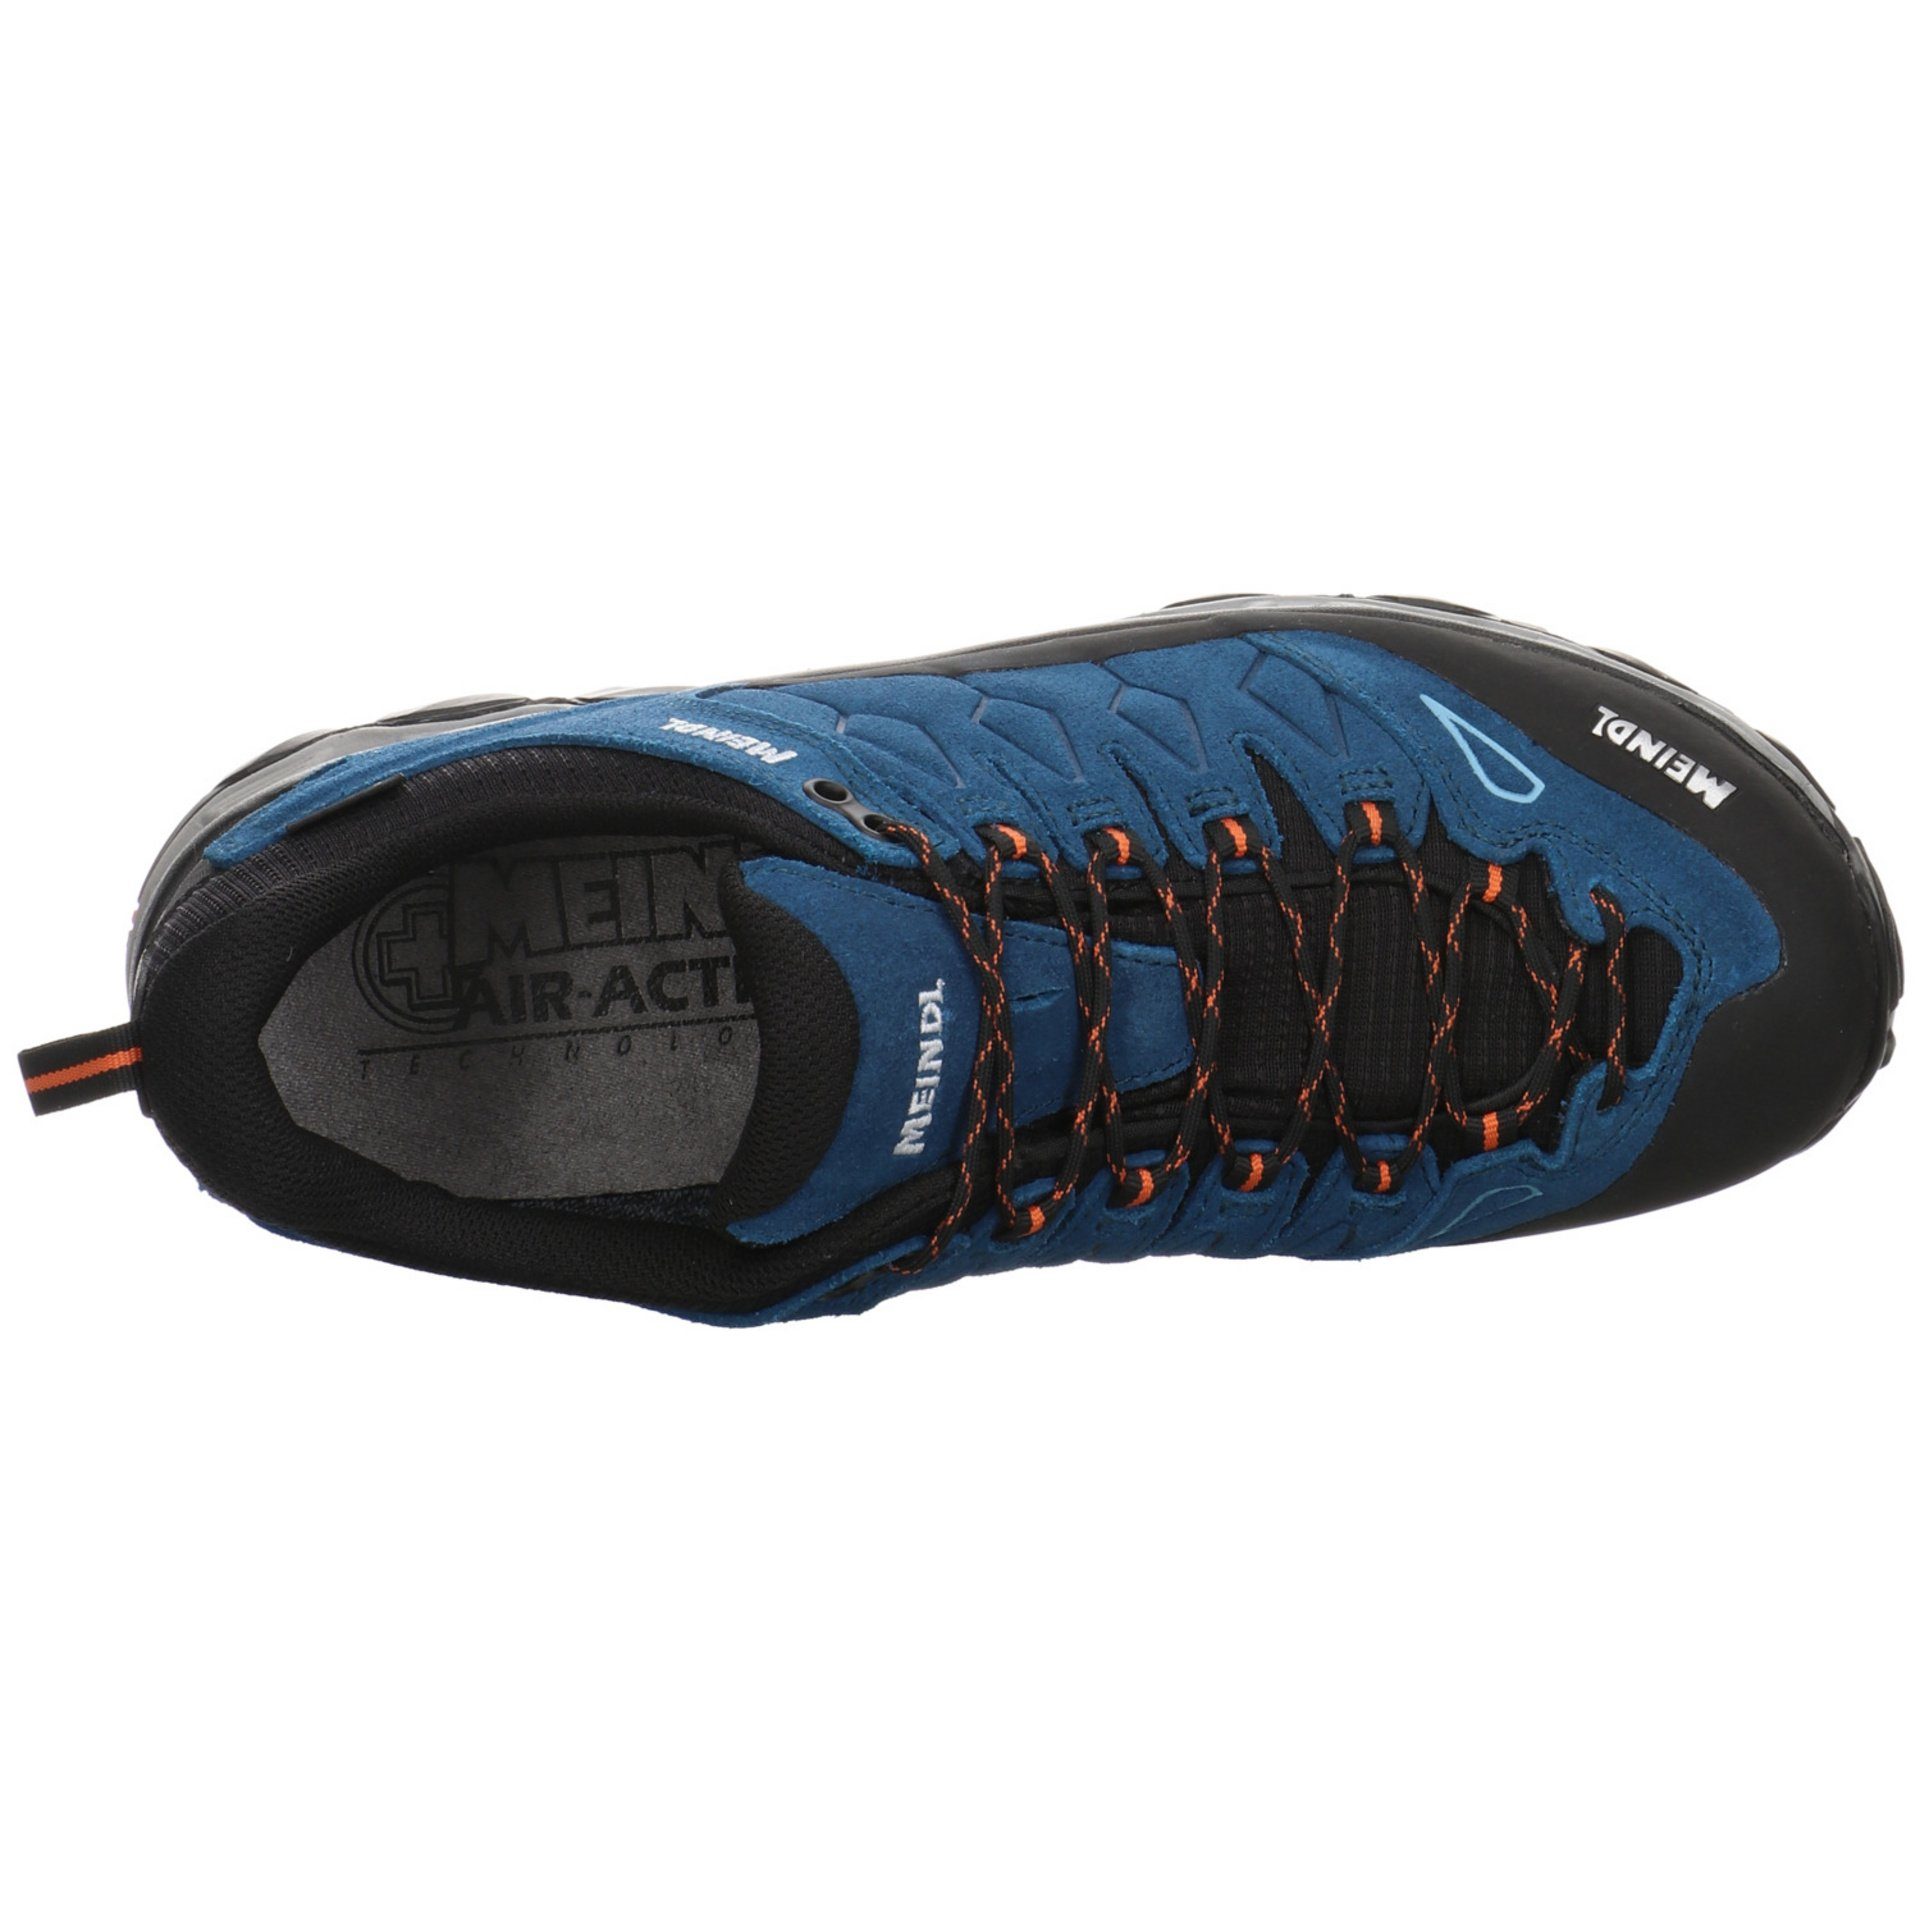 Meindl Herren Outdoor Schuhe Lite Outdoorschuh Outdoorschuh Trail Leder-/Textilkombination GTX blau/orange